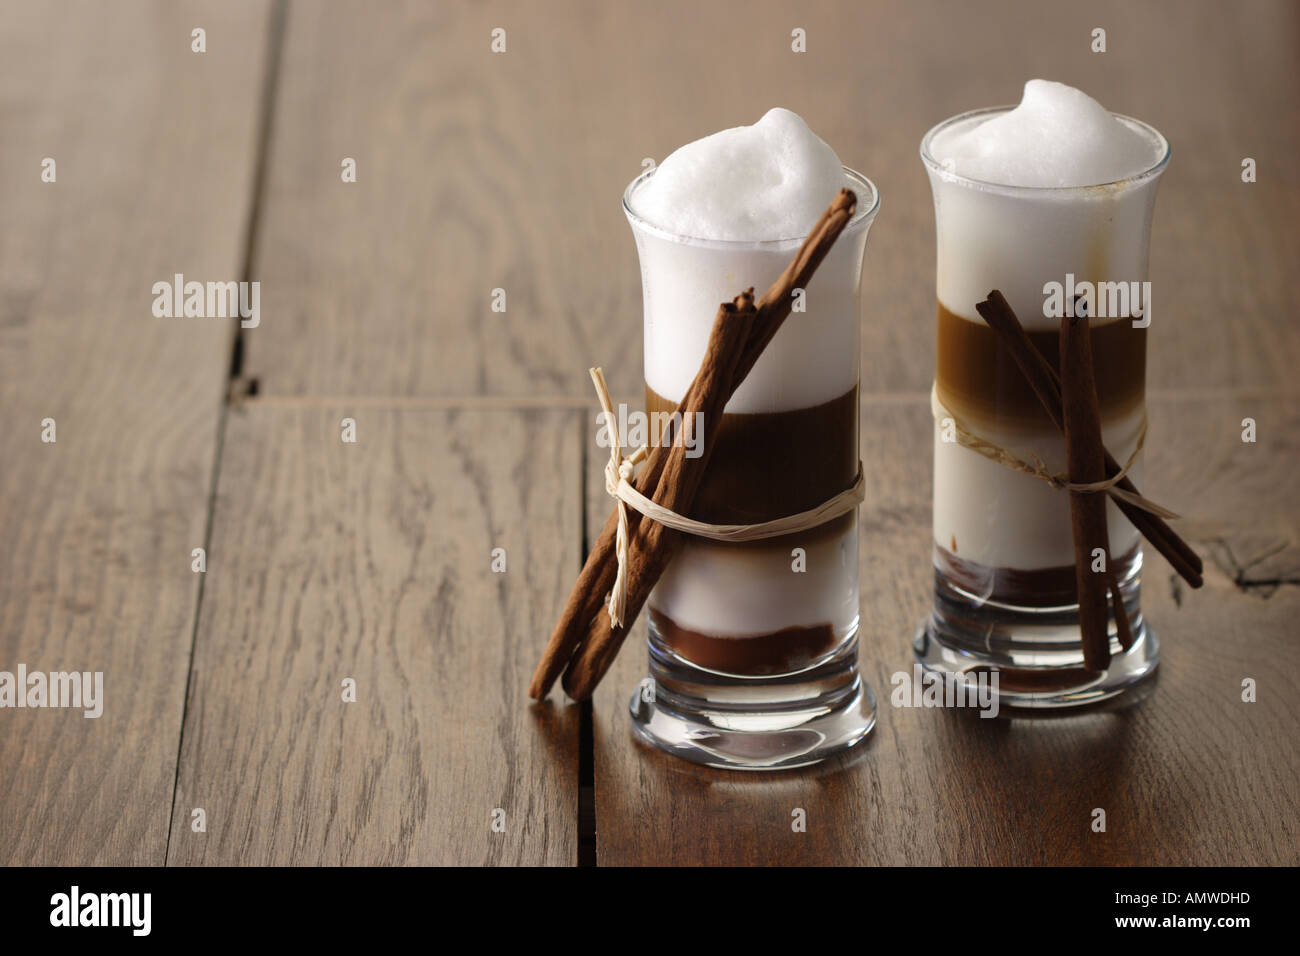 Two Latte Macchiato Nougat with cinnamon flavour and cinnamon sticks Stock Photo